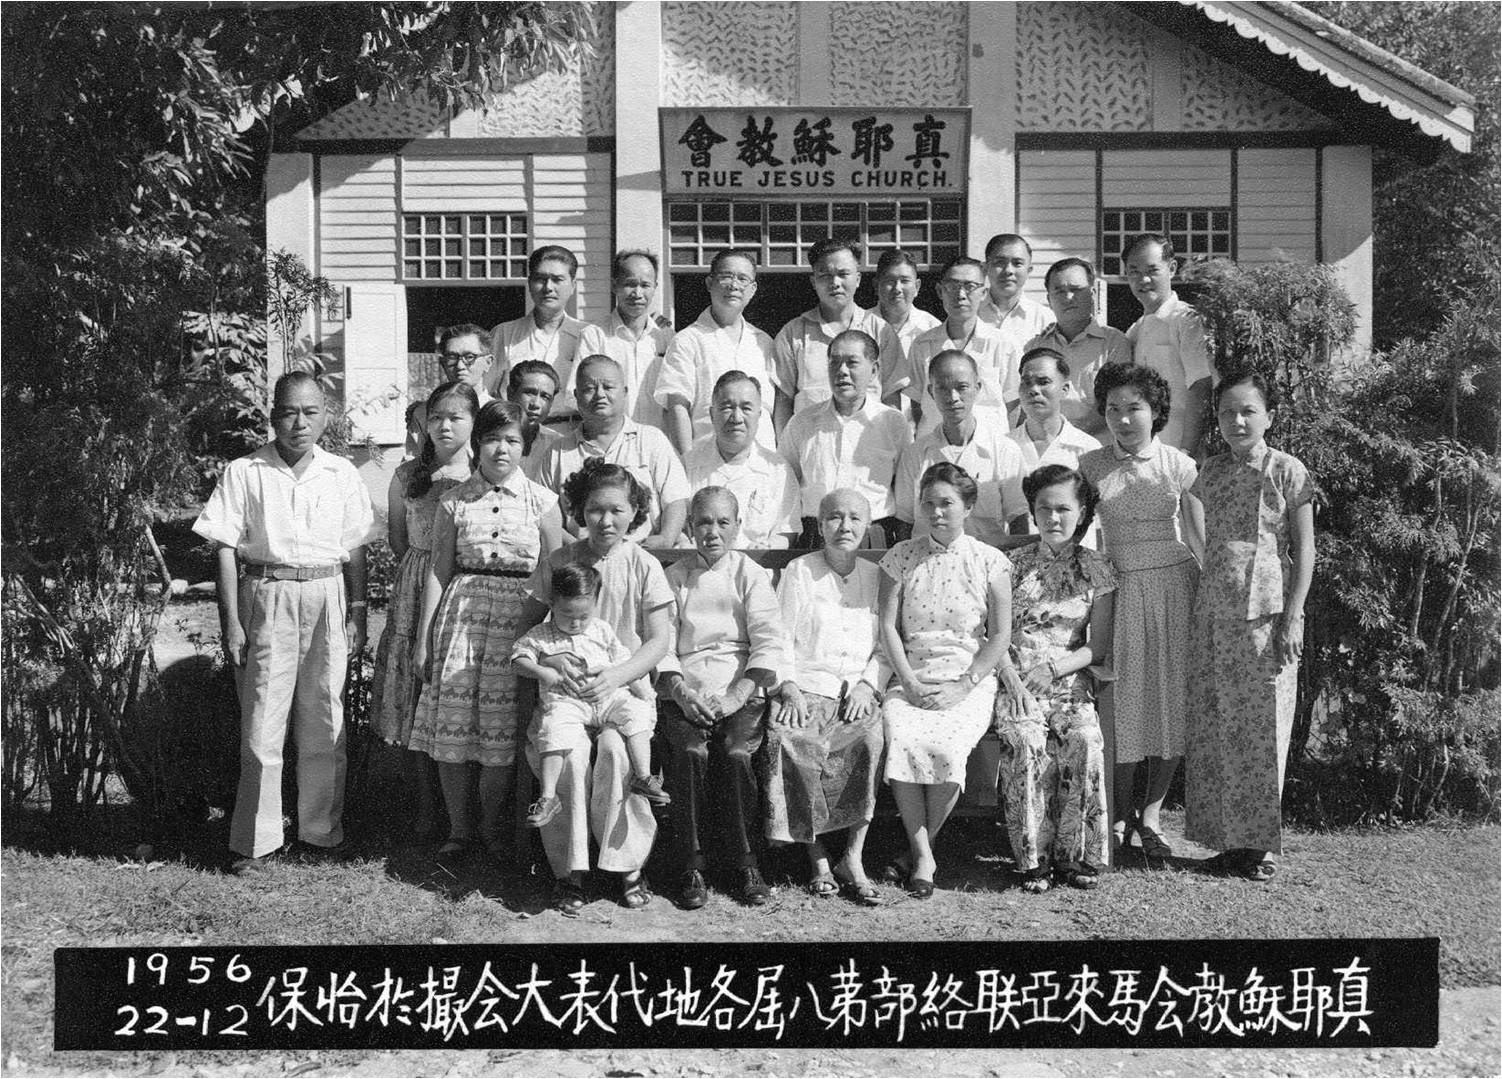 TJC Malaya Coordination Board 8th Annual Meeting in Ipoh 真耶稣教会马来亚各地代表大会于怡保 22/12/1956